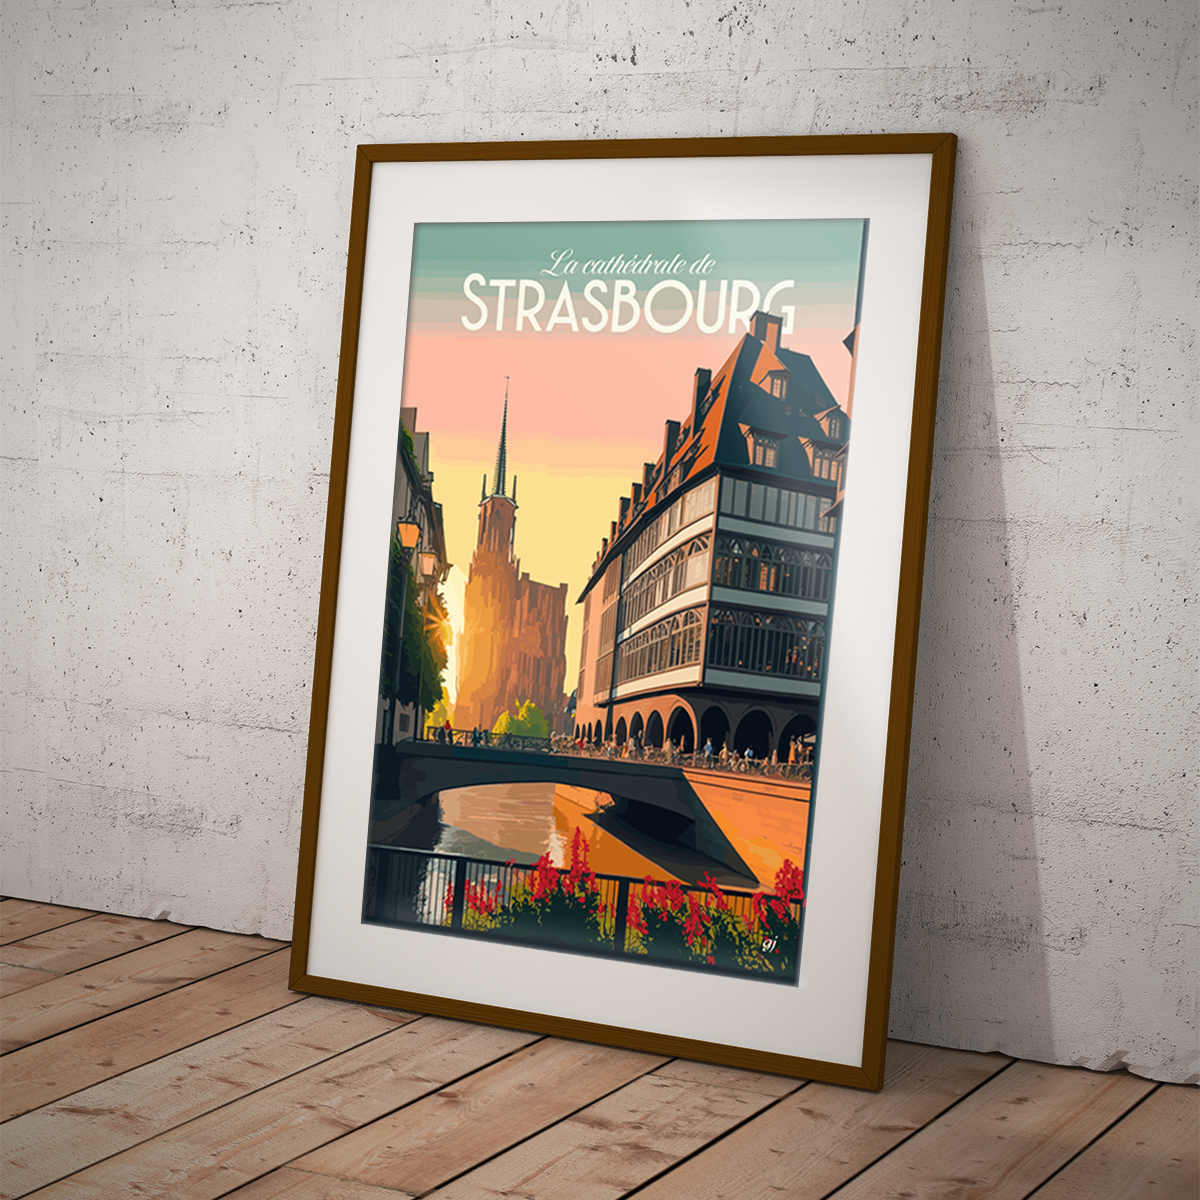 Strasbourg poster by bon voyage design